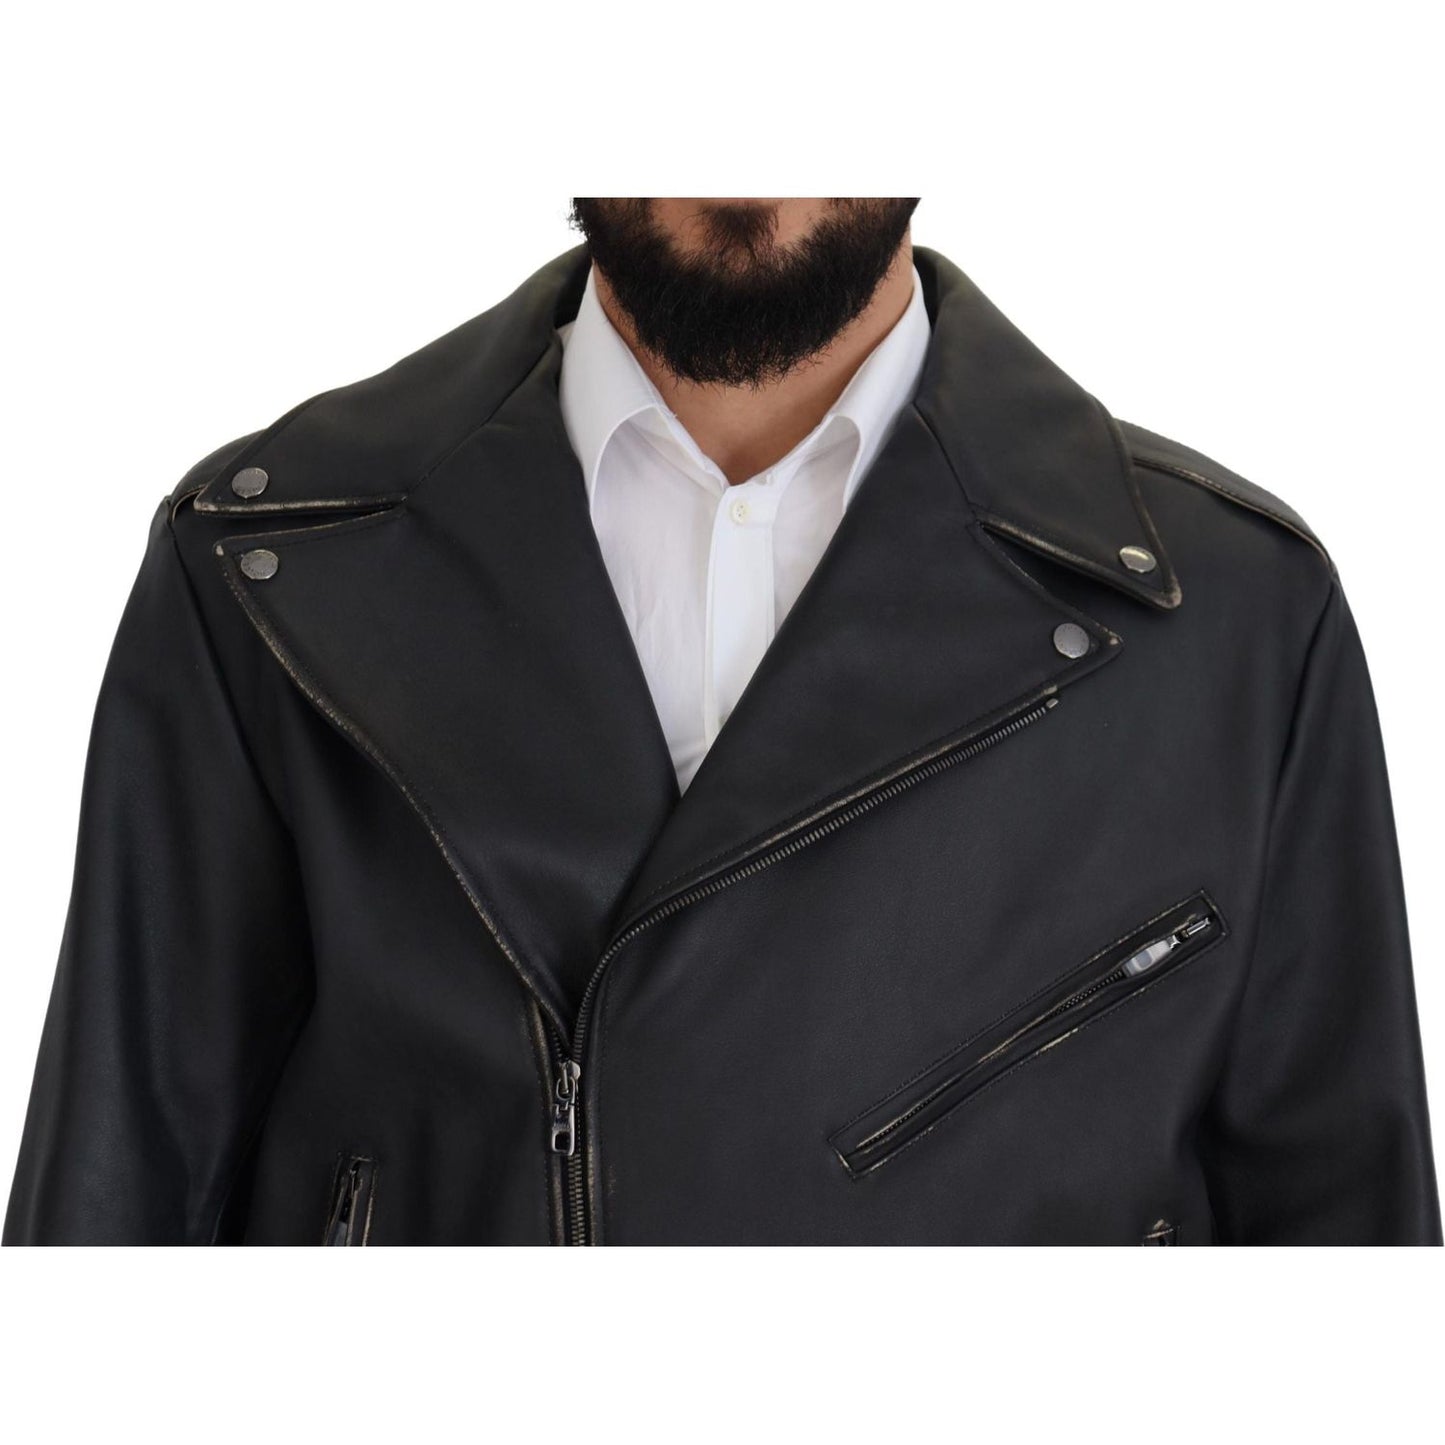 Dolce & Gabbana Elegant Black Leather Biker Jacket black-leather-biker-coat-zipper-jacket